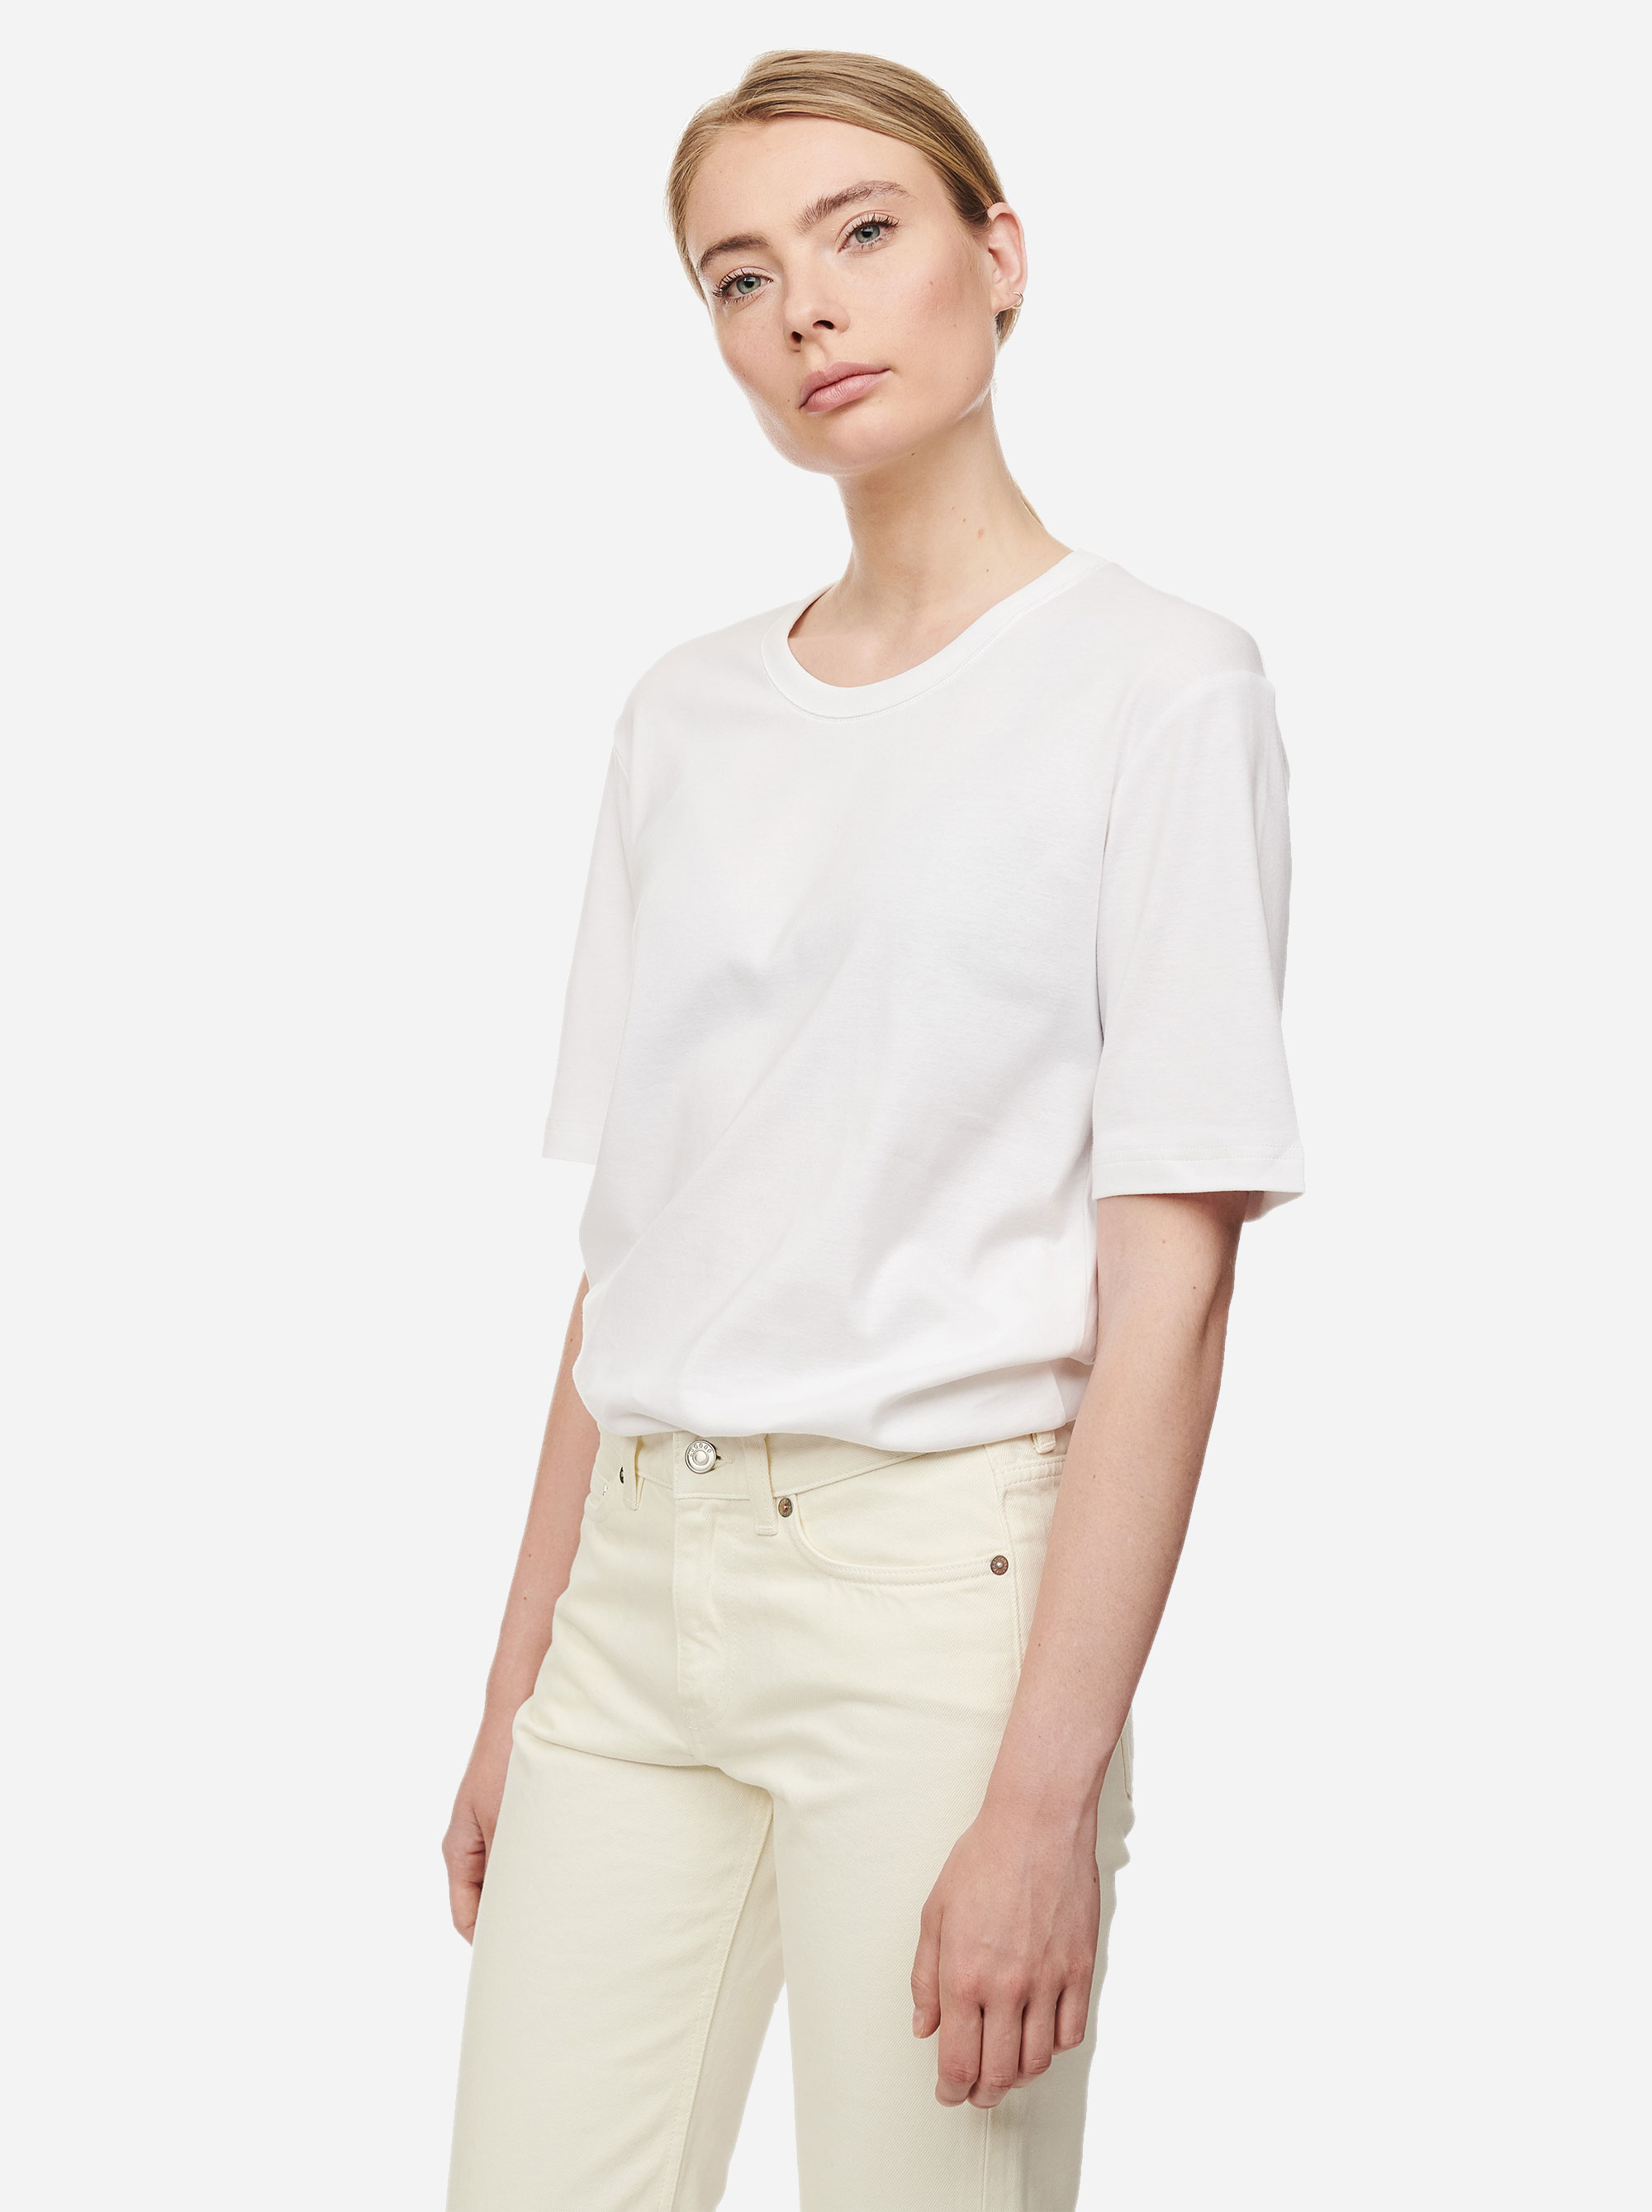 Teym - The T-Shirt - Women - White - V2 - 3